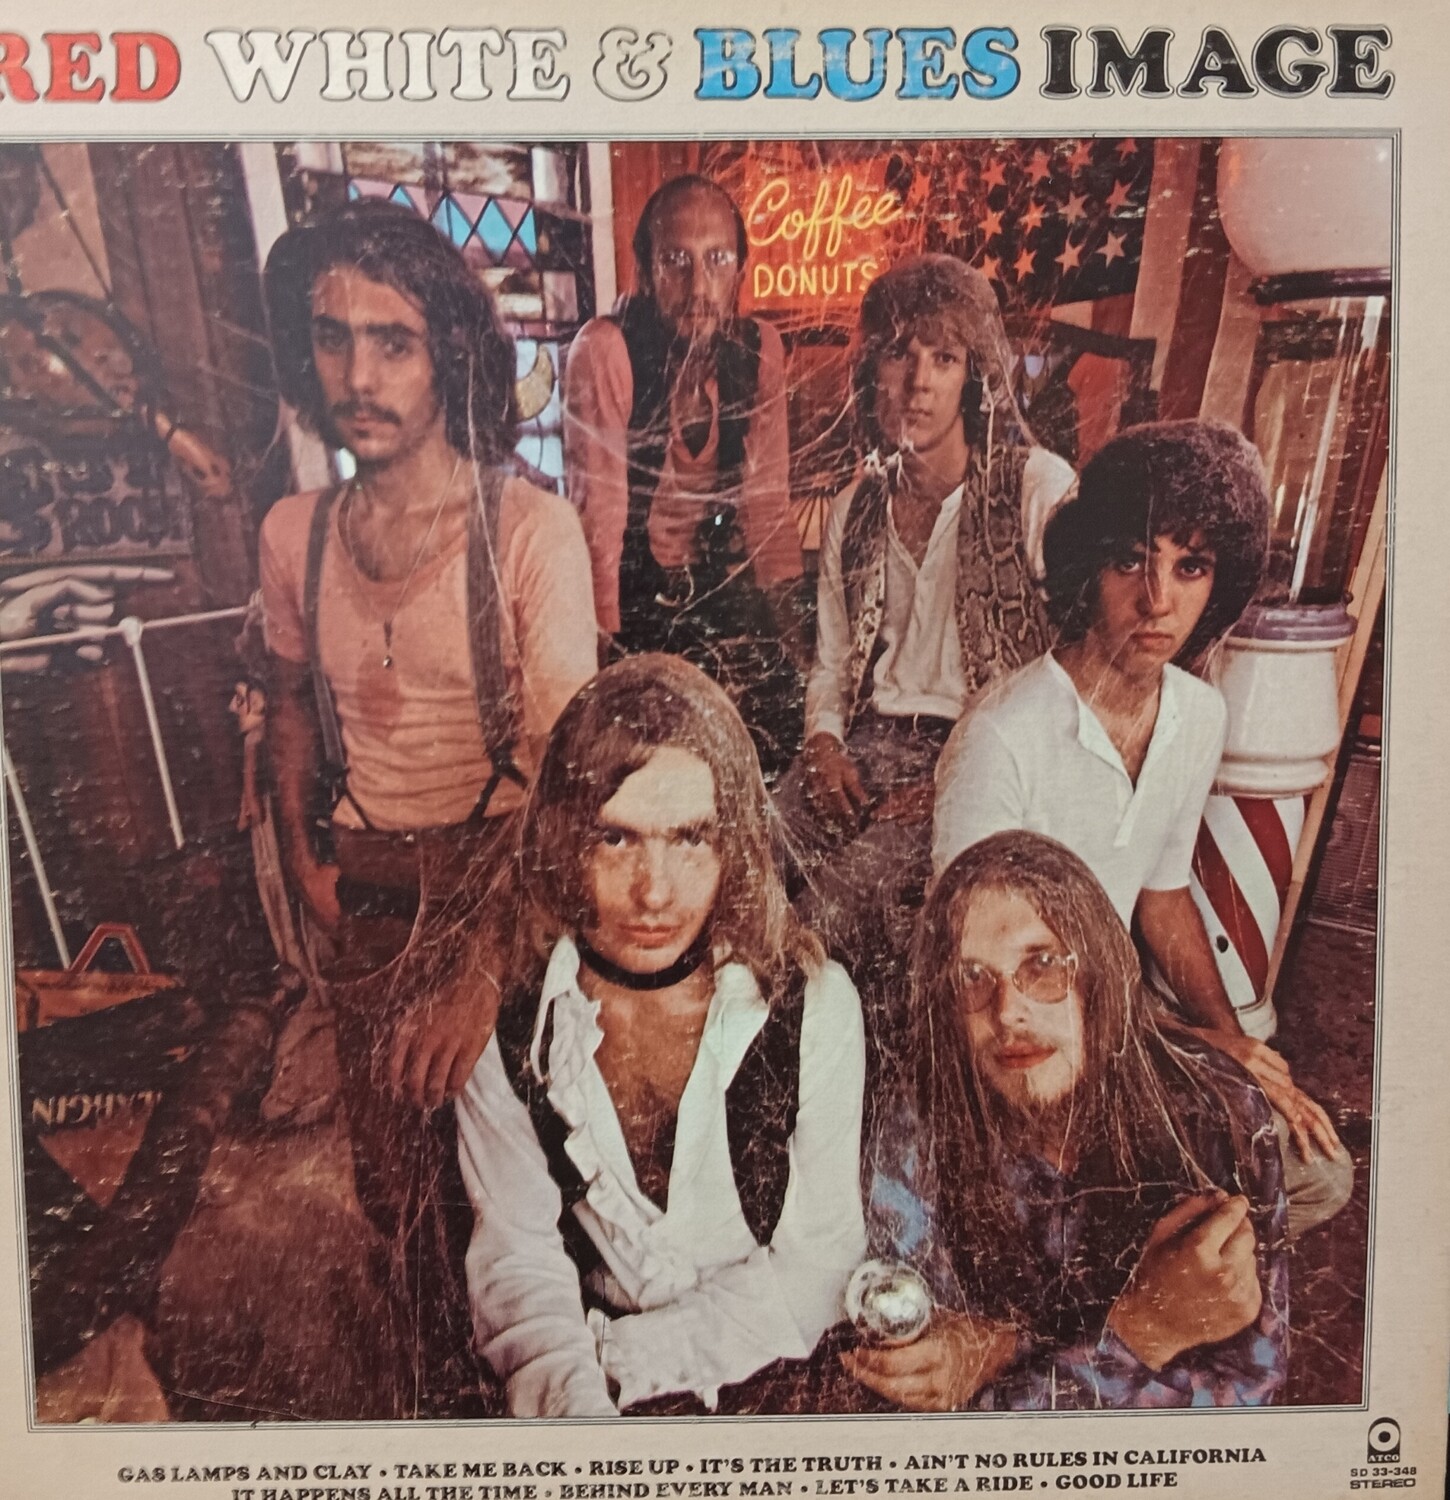 BLUES IMAGE - Red White & Blues Image